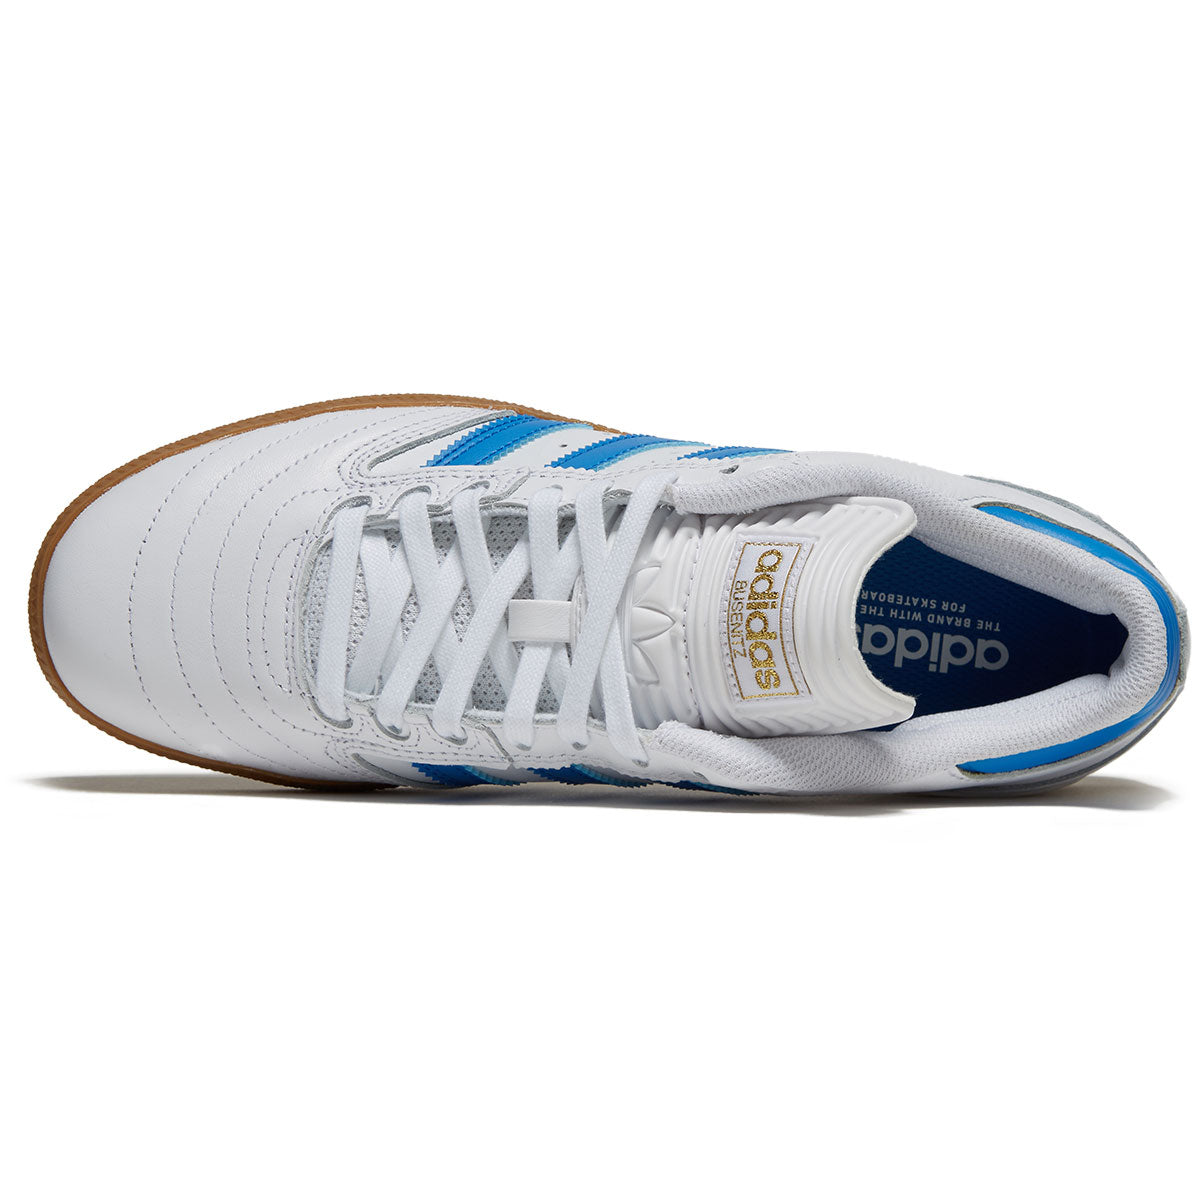 Adidas Busenitz Shoes - White/Bluebird/Gold Metallic image 3